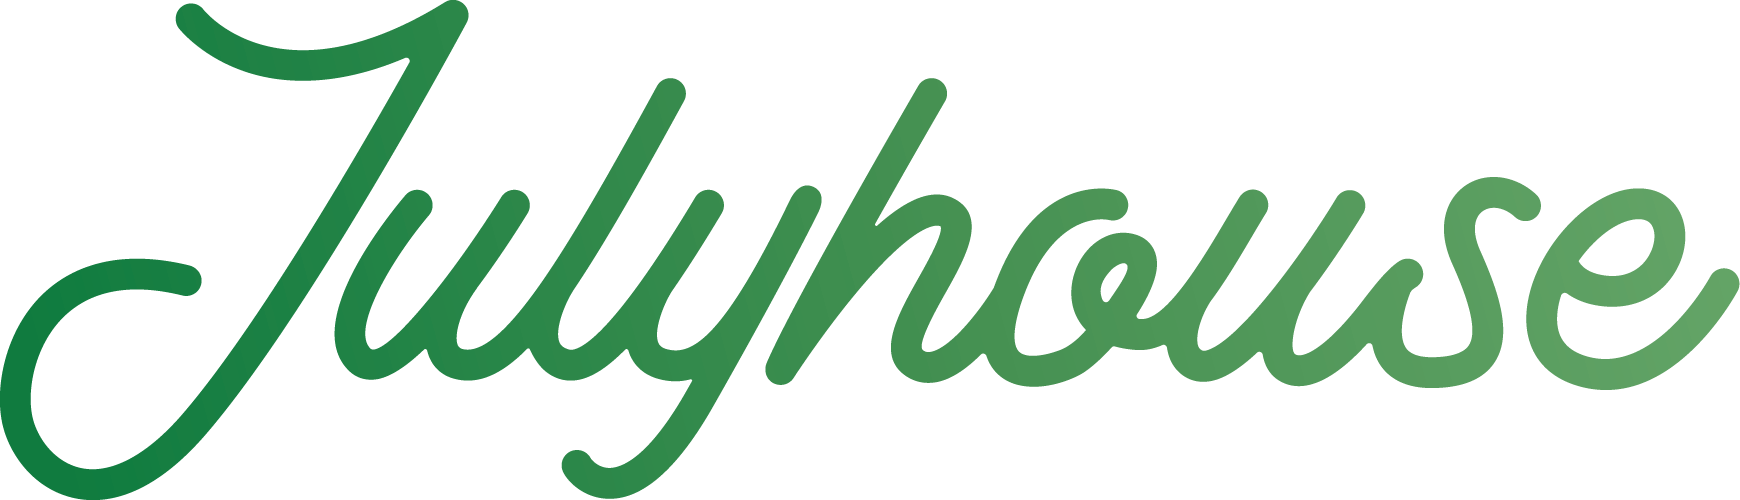 logo JULYHOUSE